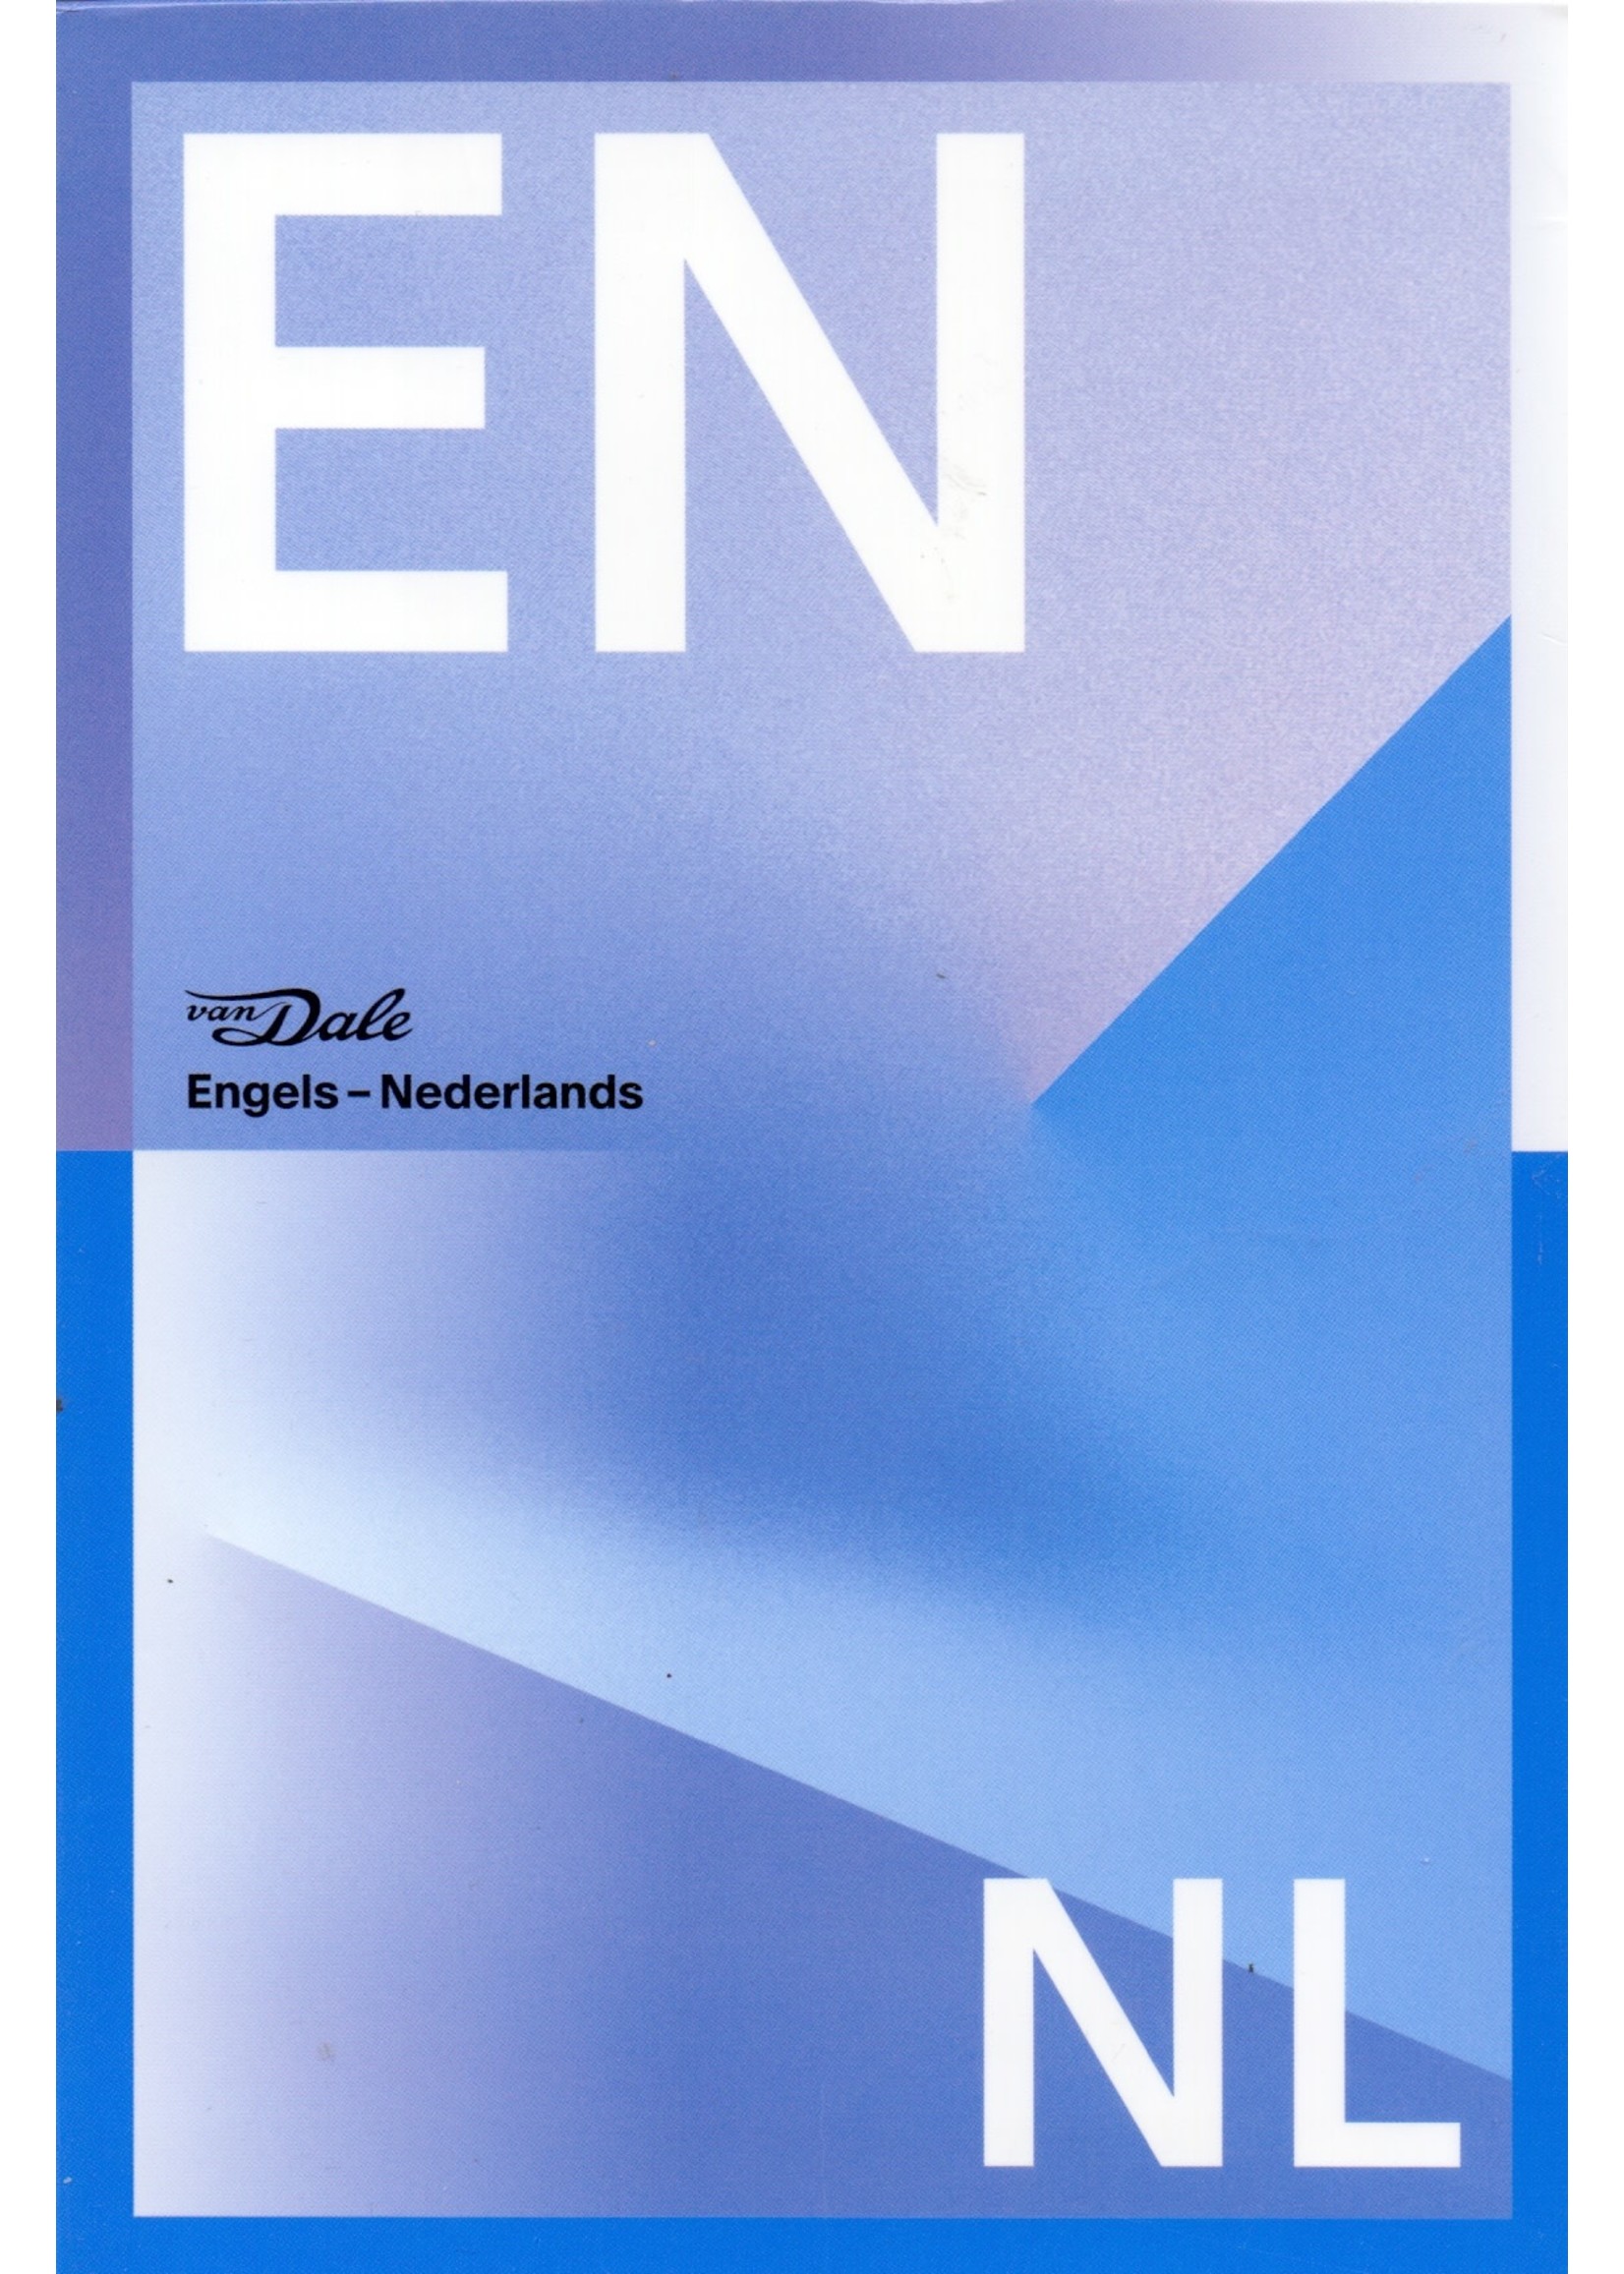 Boek Van Dale Groot woordenboek Engels-Nederlands voor school - Van Dale - 9789460775185